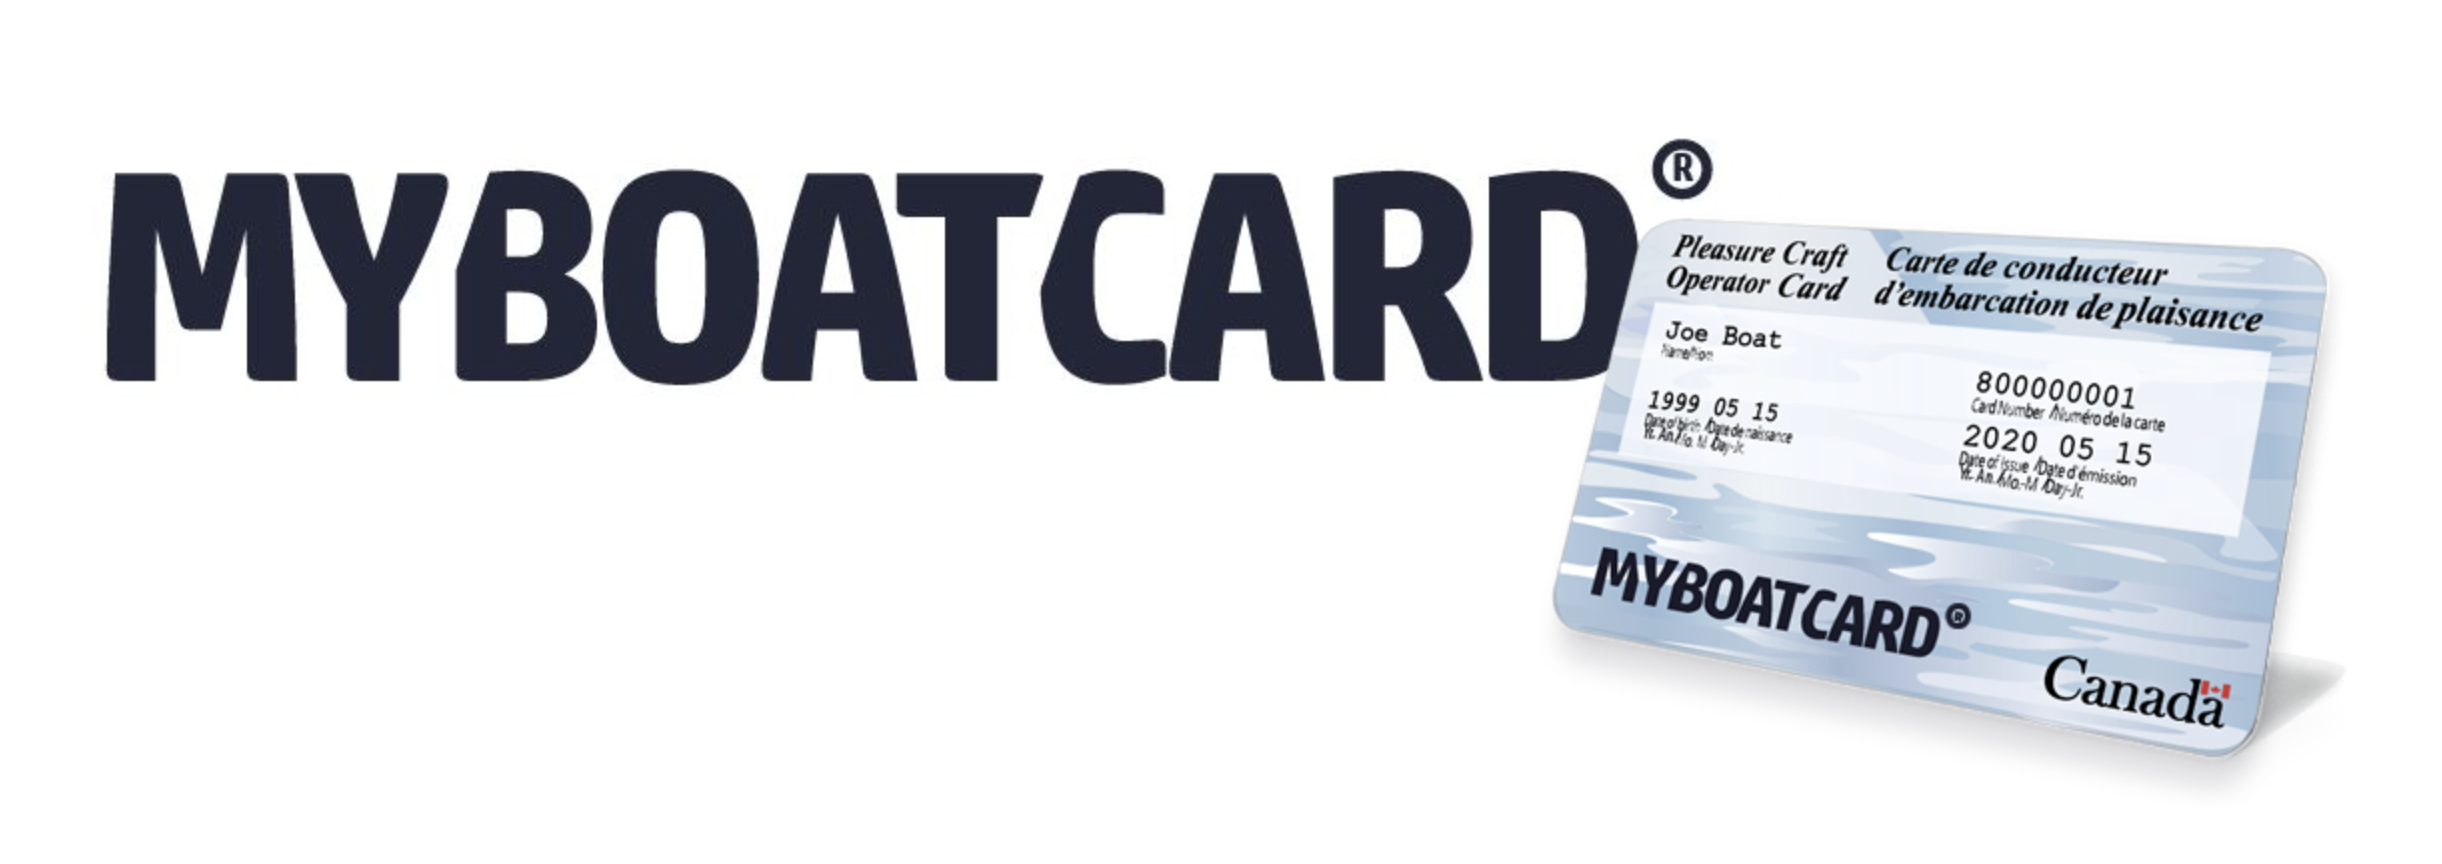 My Boat Card logo